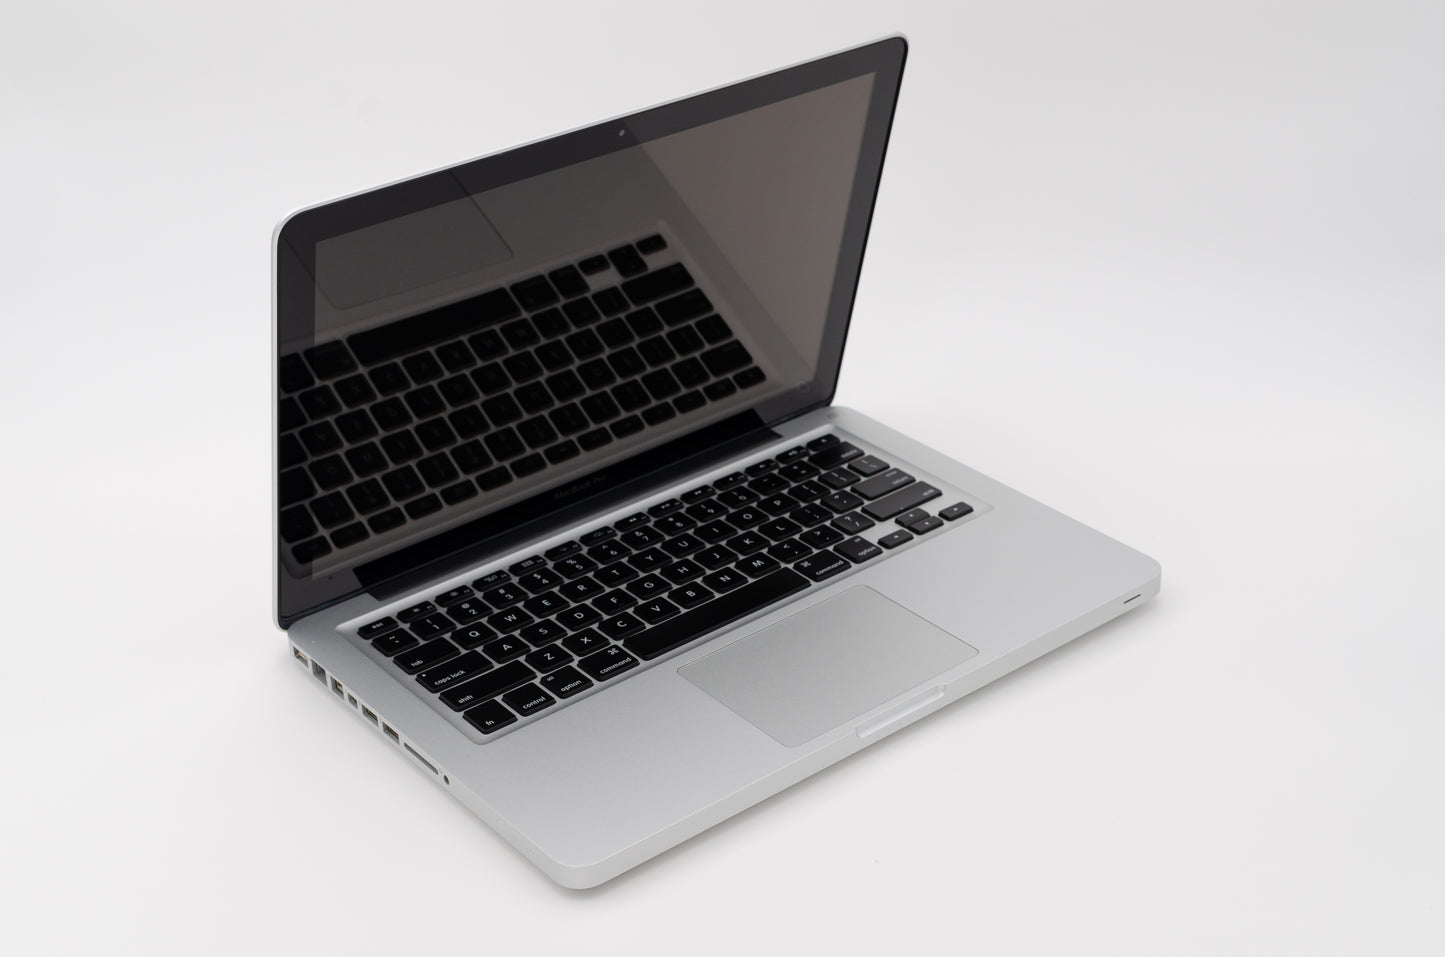 apple-mid-2010-13.3-inch-macbook-pro-a1278-aluminum-c2d - 2.4ghz processor, 4gb ram, 320m - 256mb gpu-mc374ll/a-4